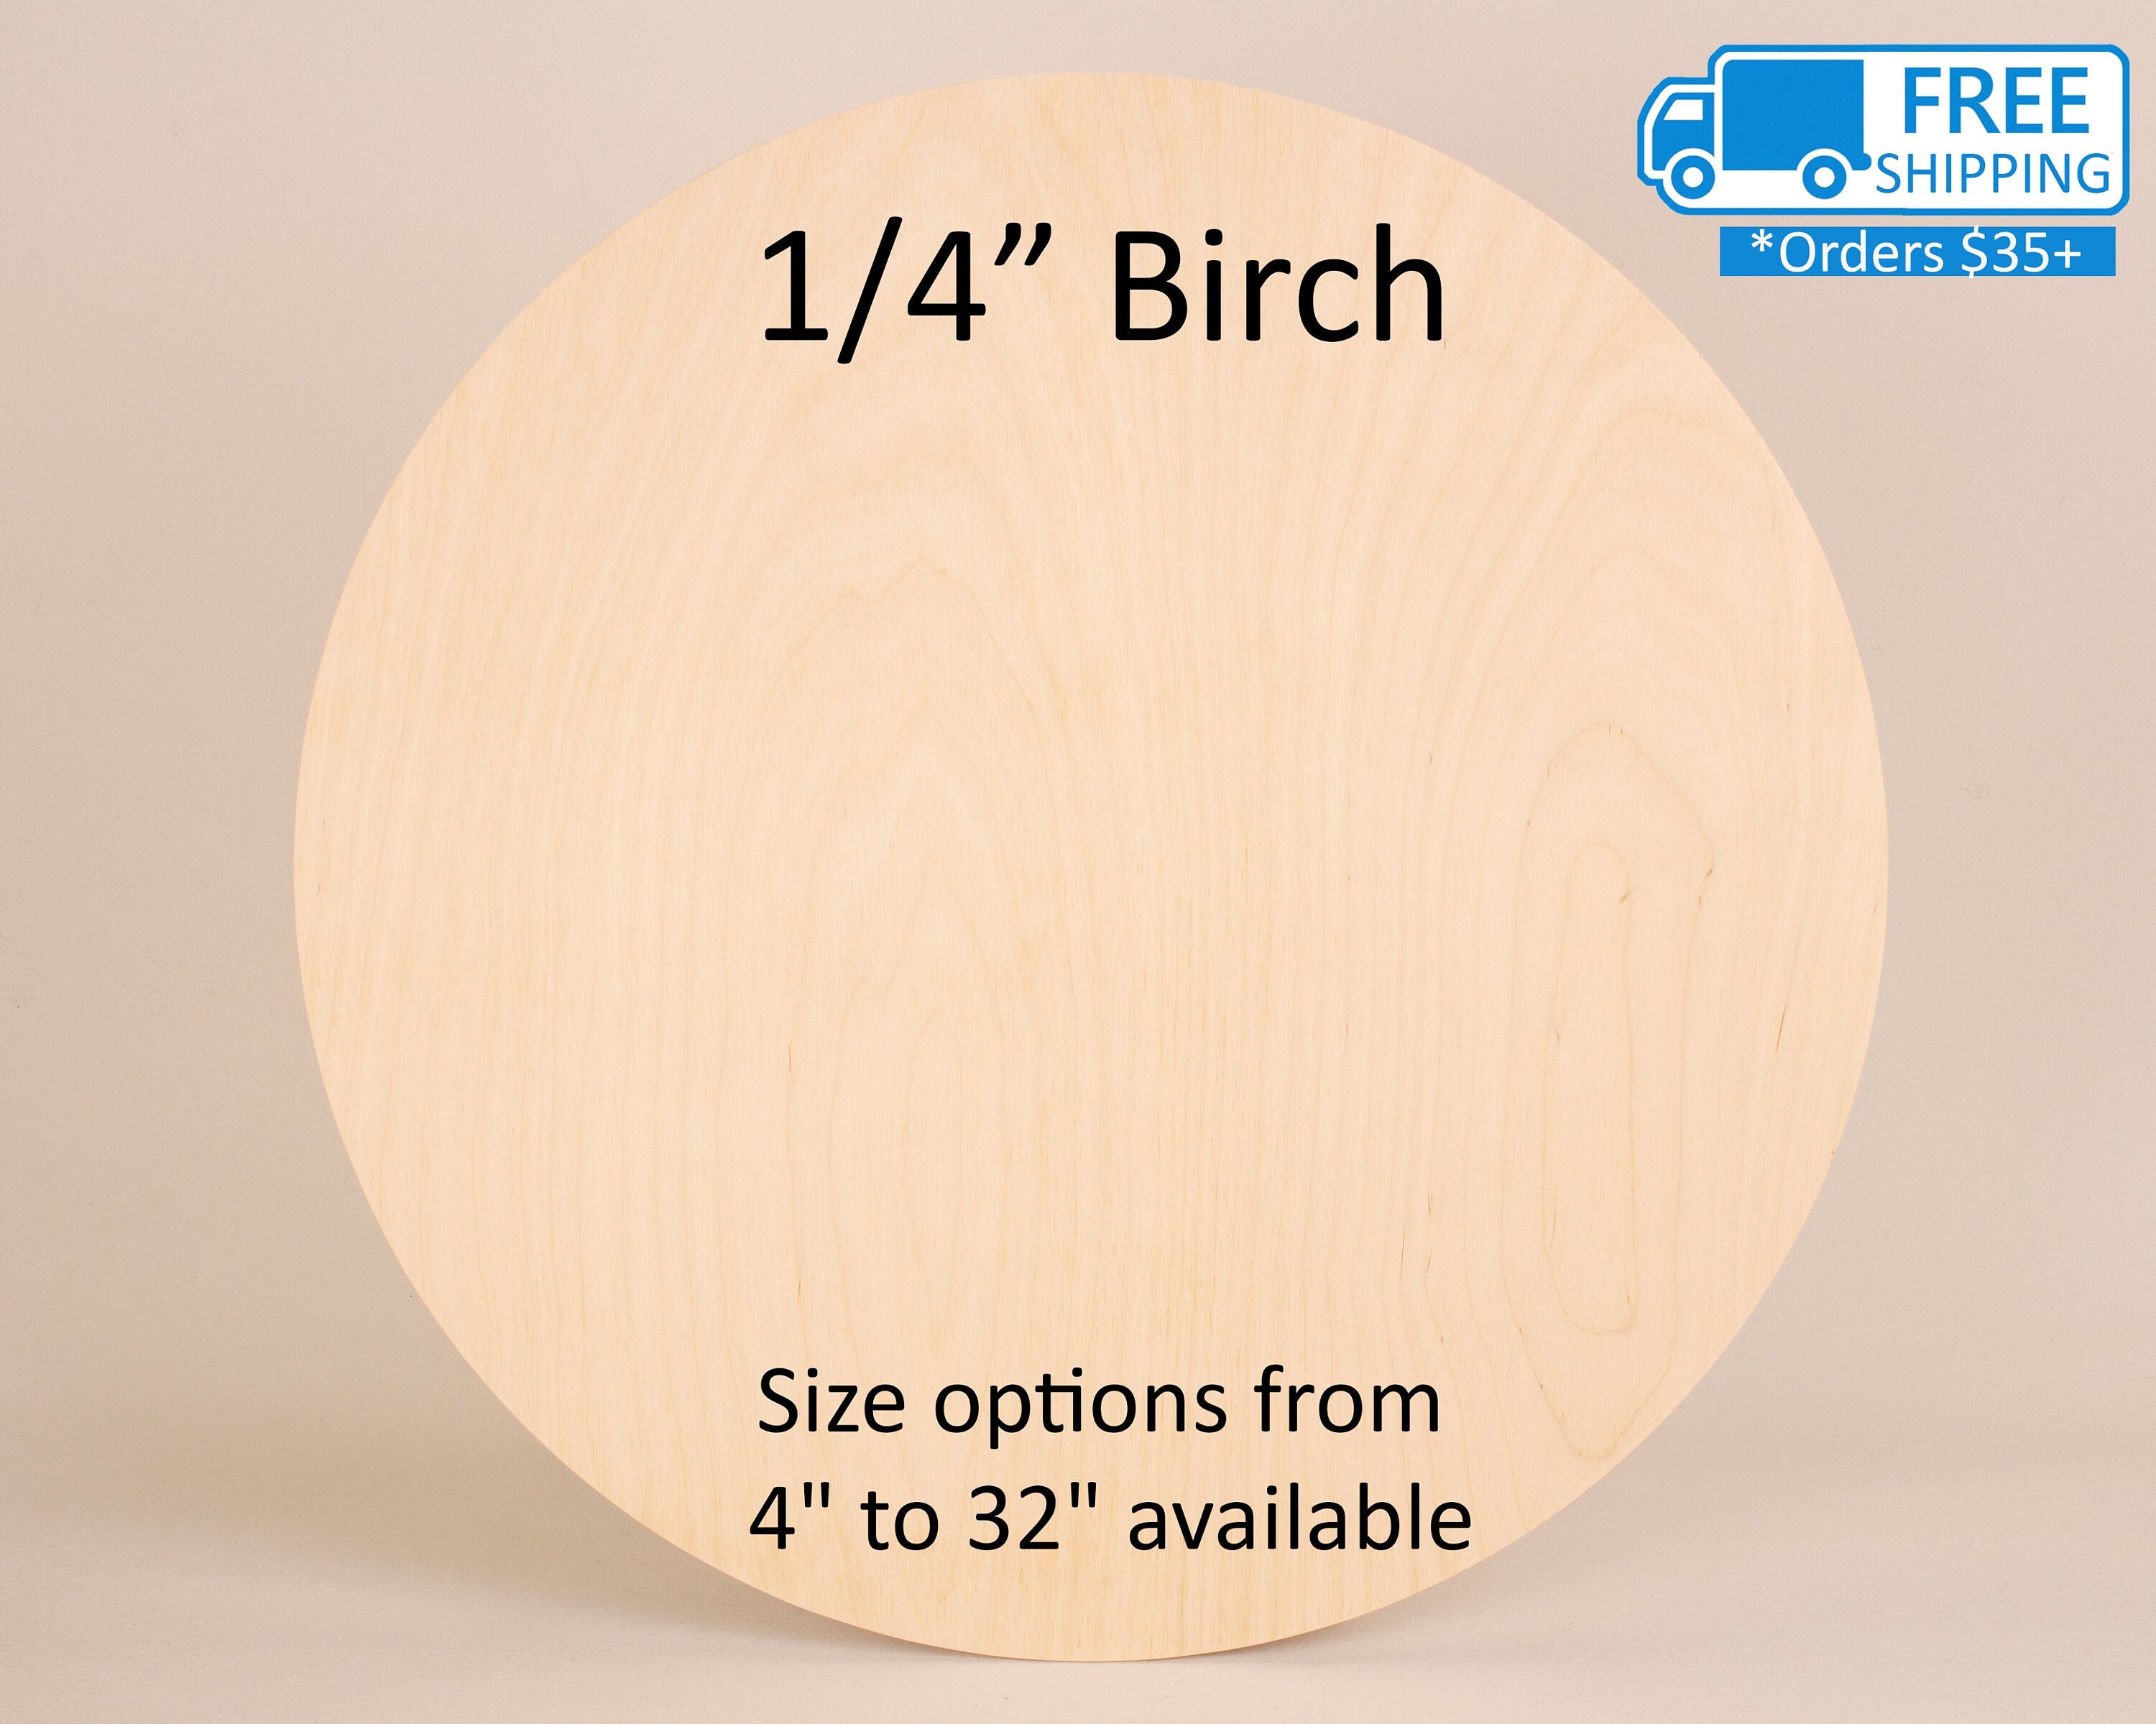 1/8 Baltic Birch Cut to Size